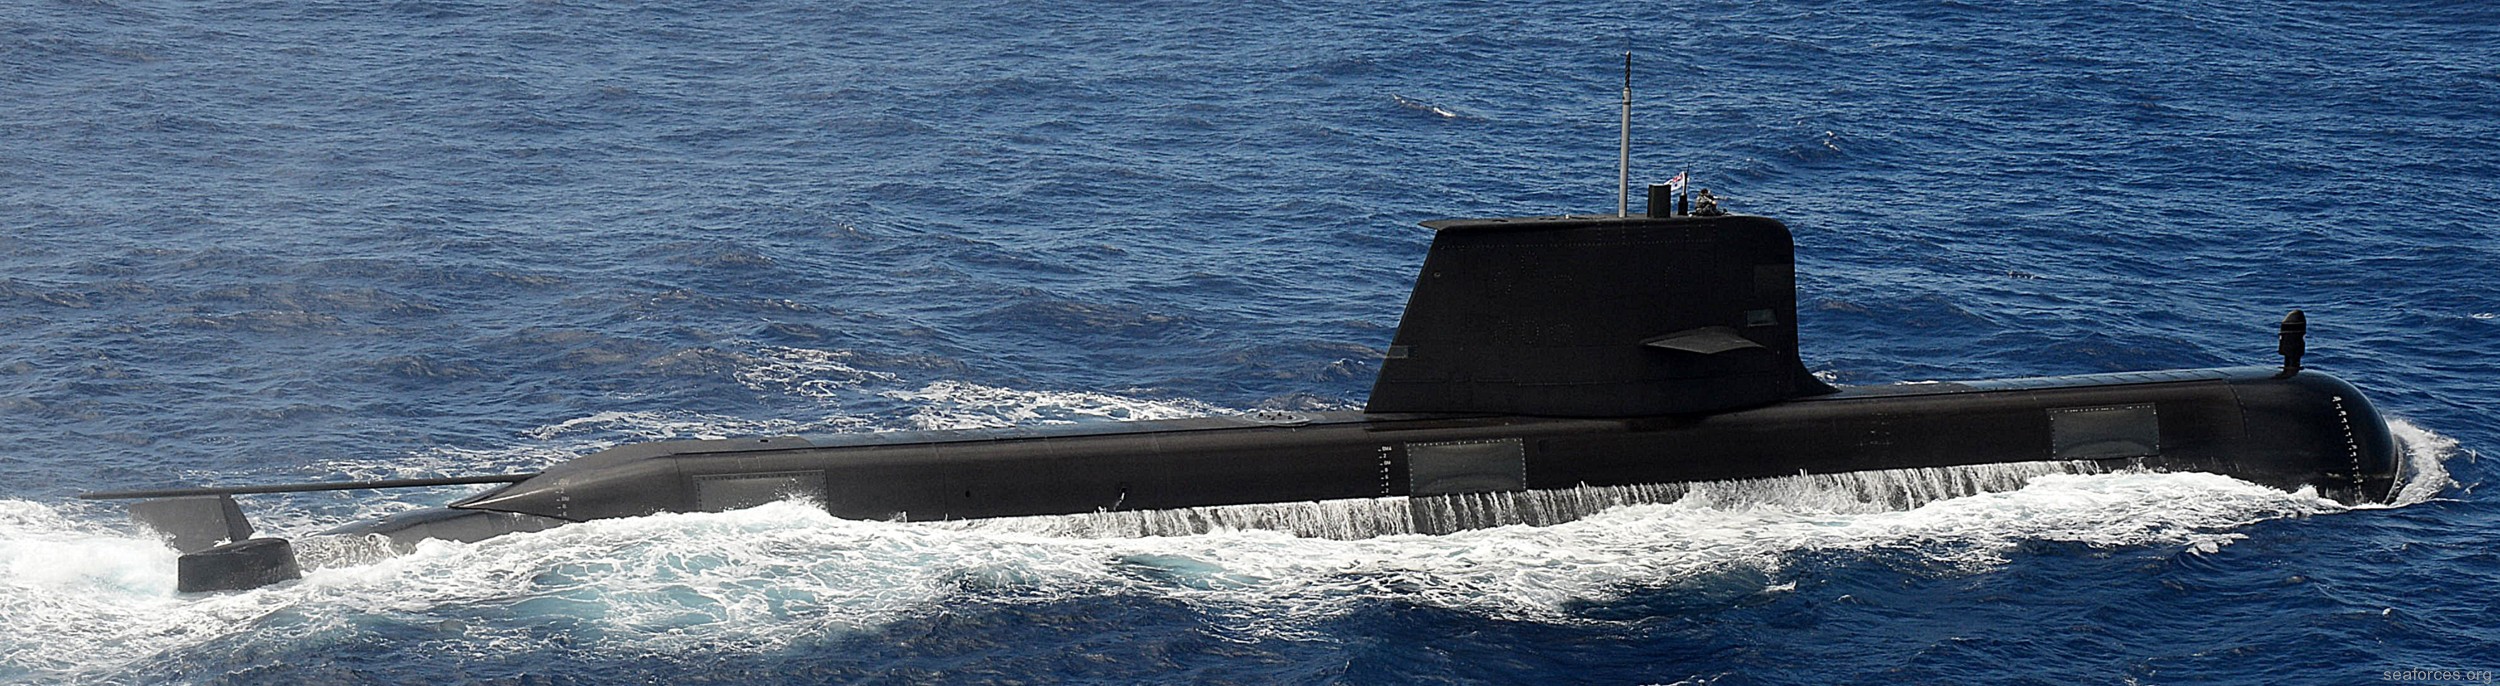 hmas sheean ssg-77 collins class attack submarine ssk royal australian navy 15